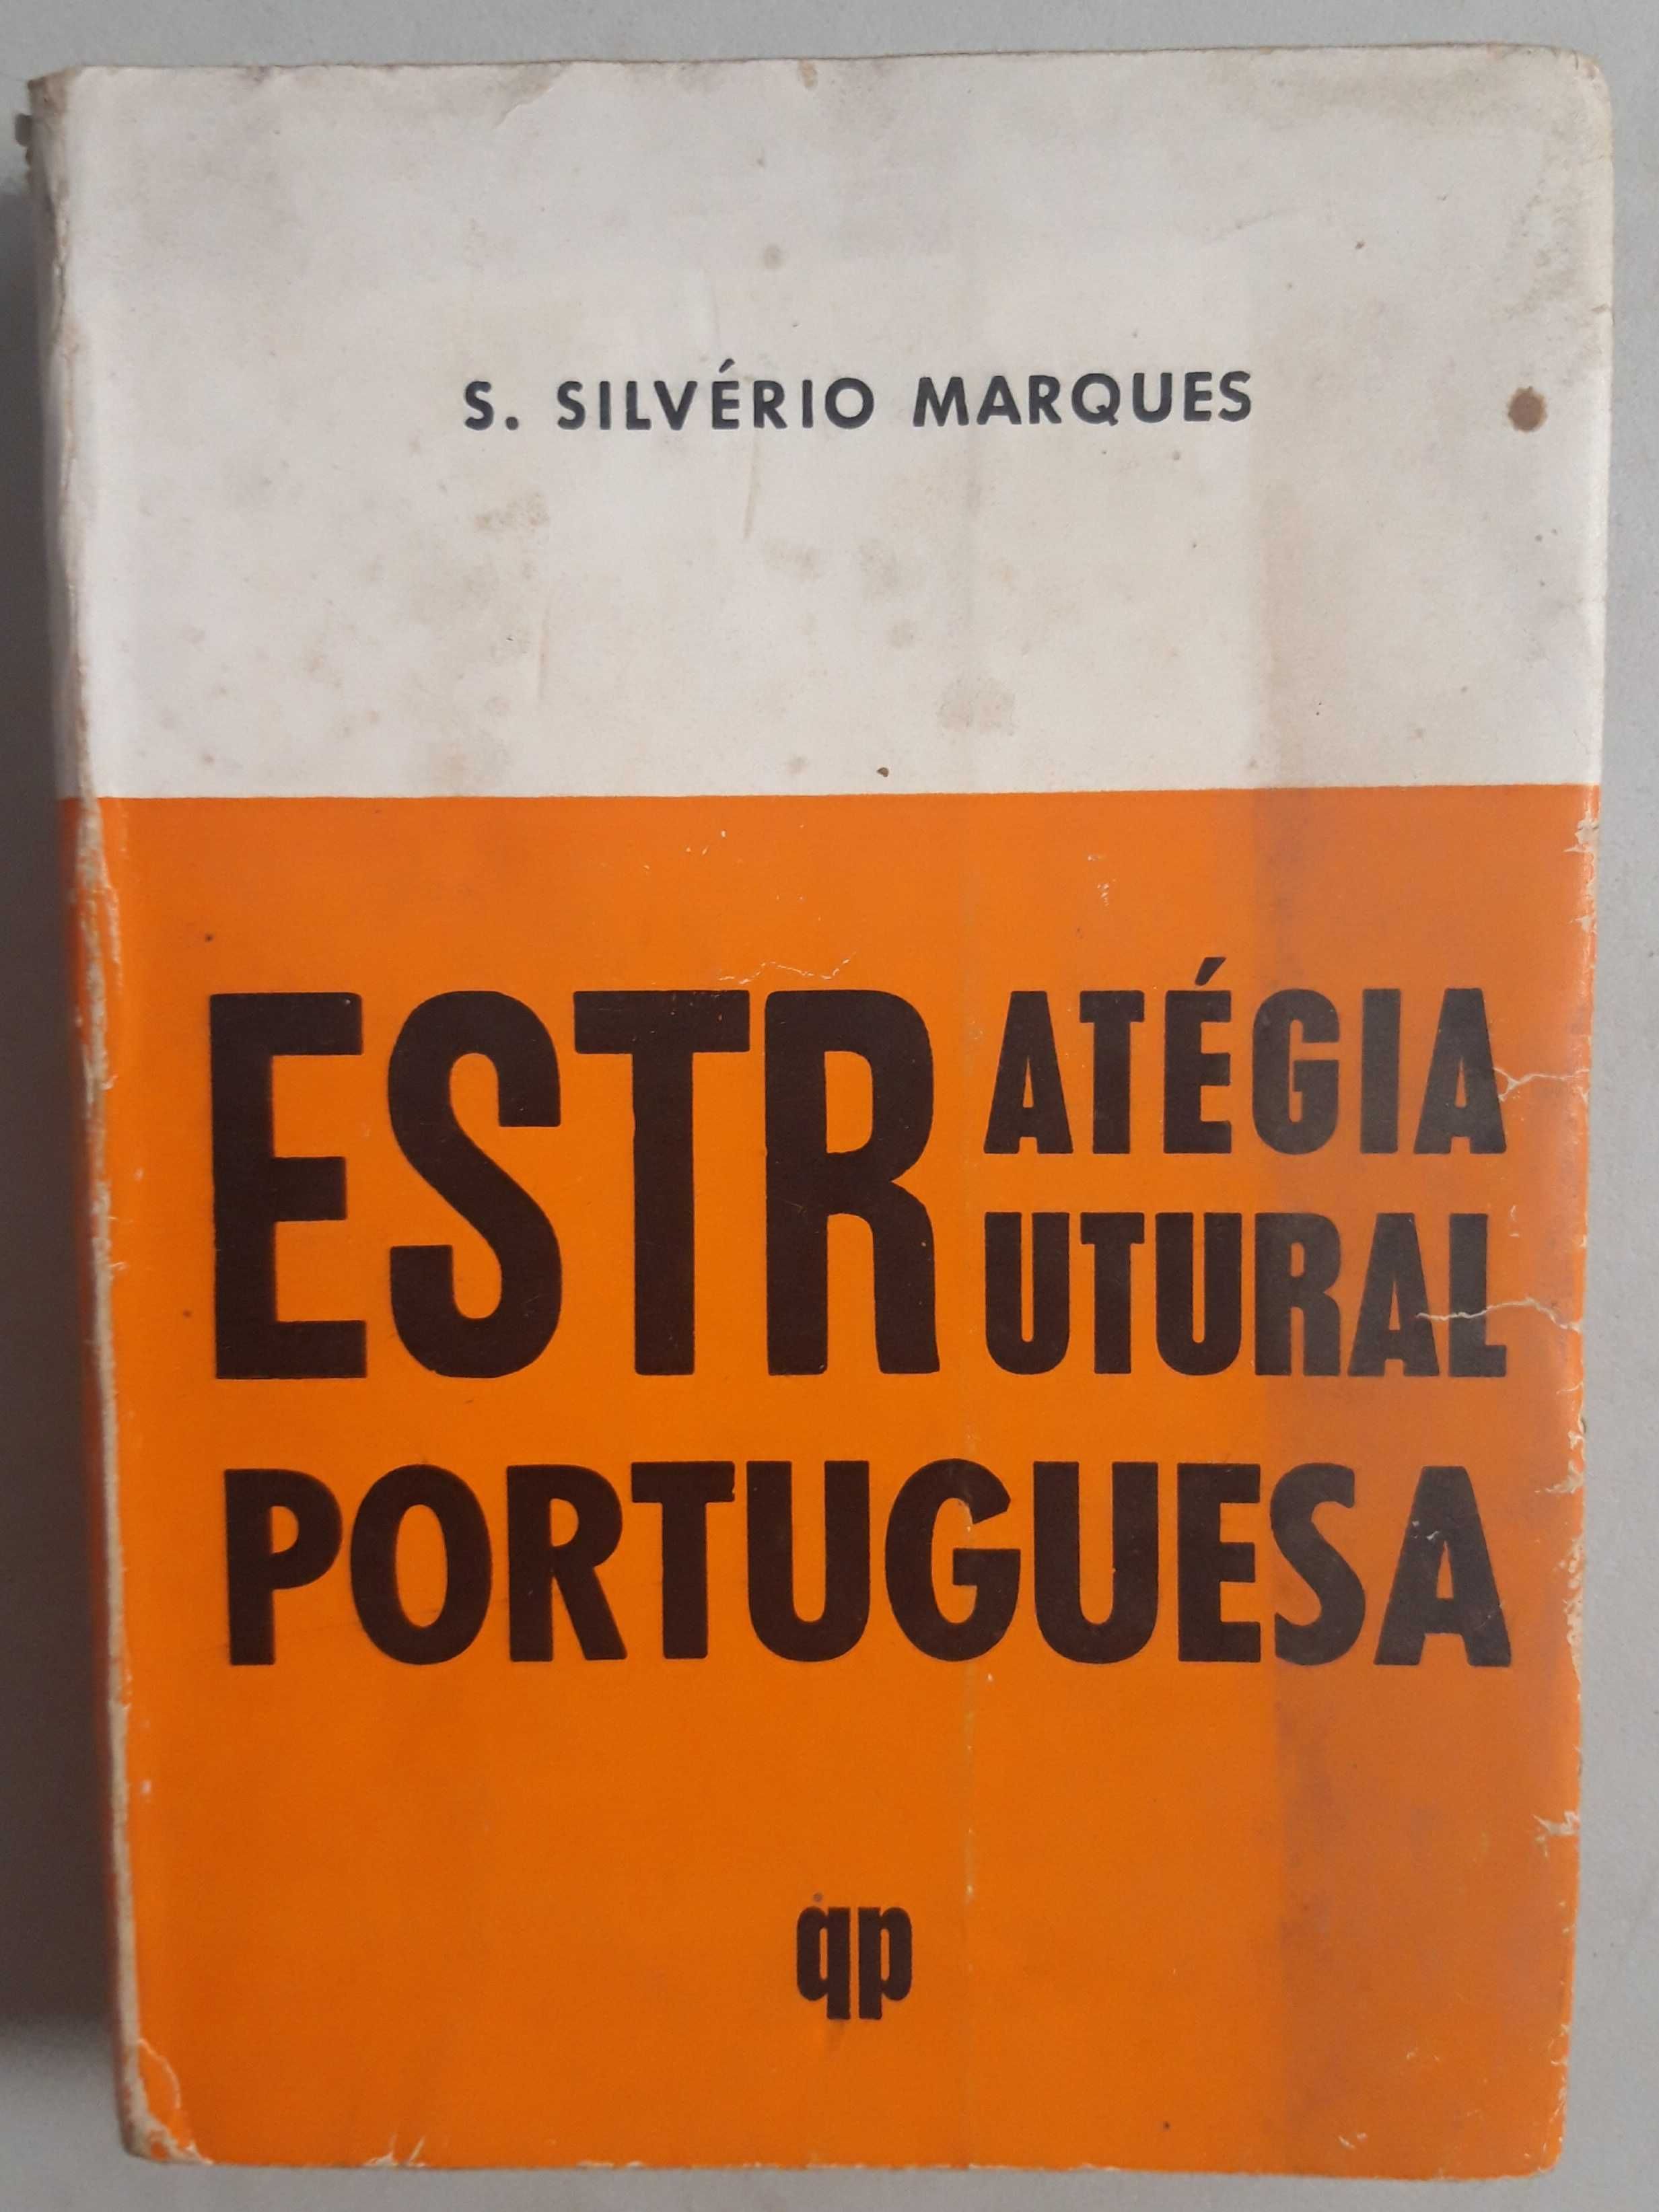 Livro PA-2 - S. Silvério Marques - Estratégia Estrutural Portuguesa